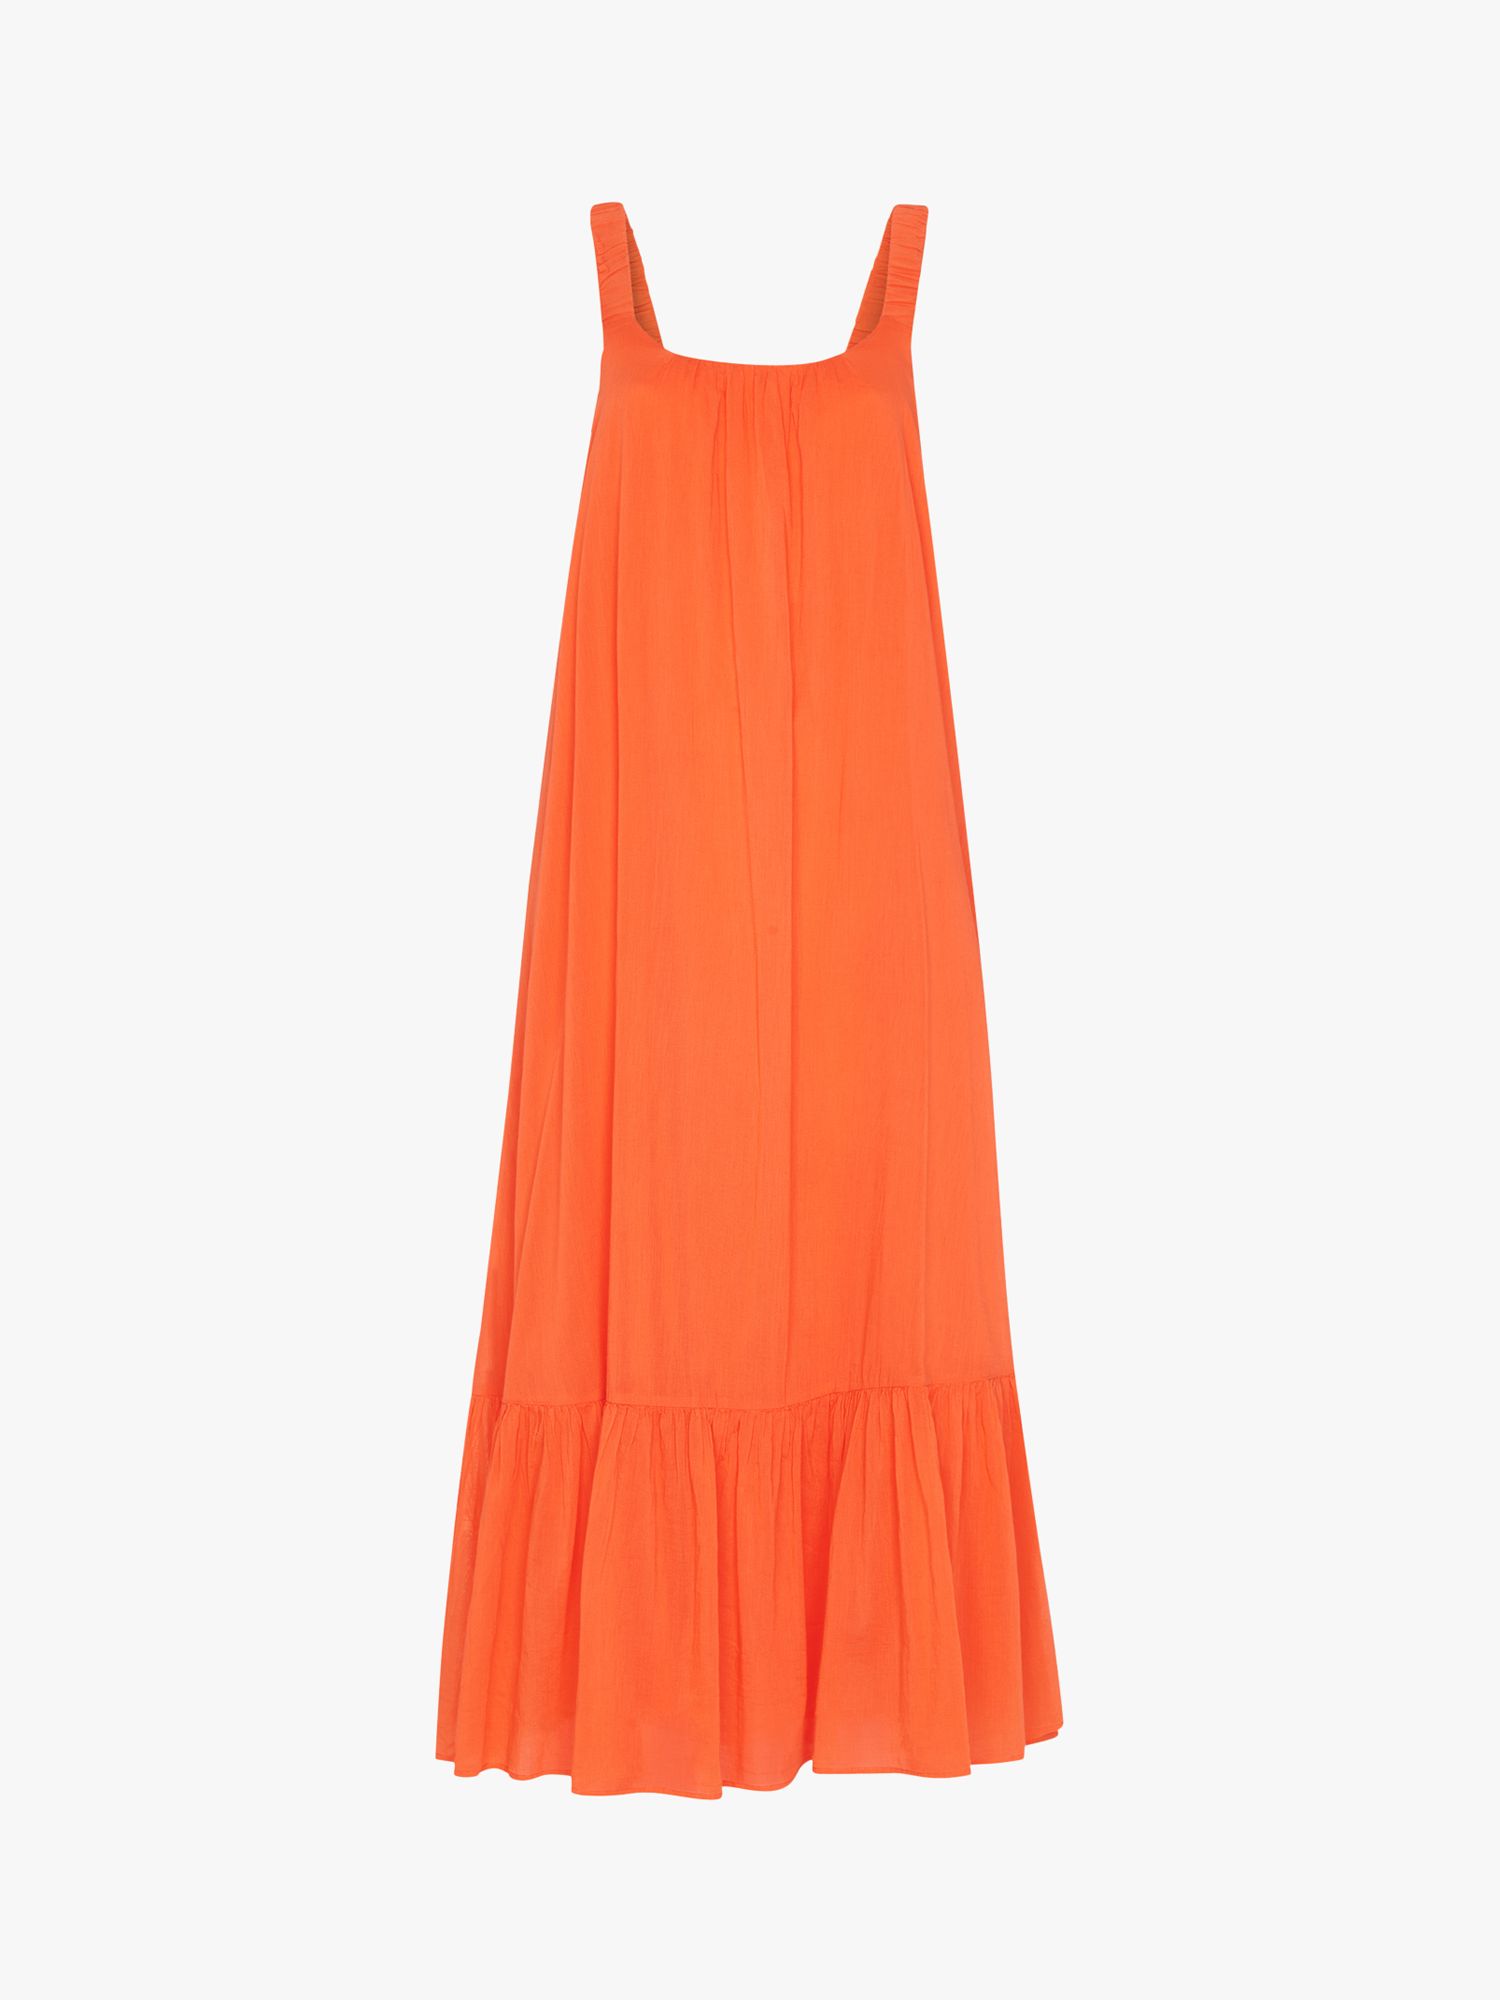 Whistles Rhea Trapeze Midi Dress, Orange at John Lewis & Partners